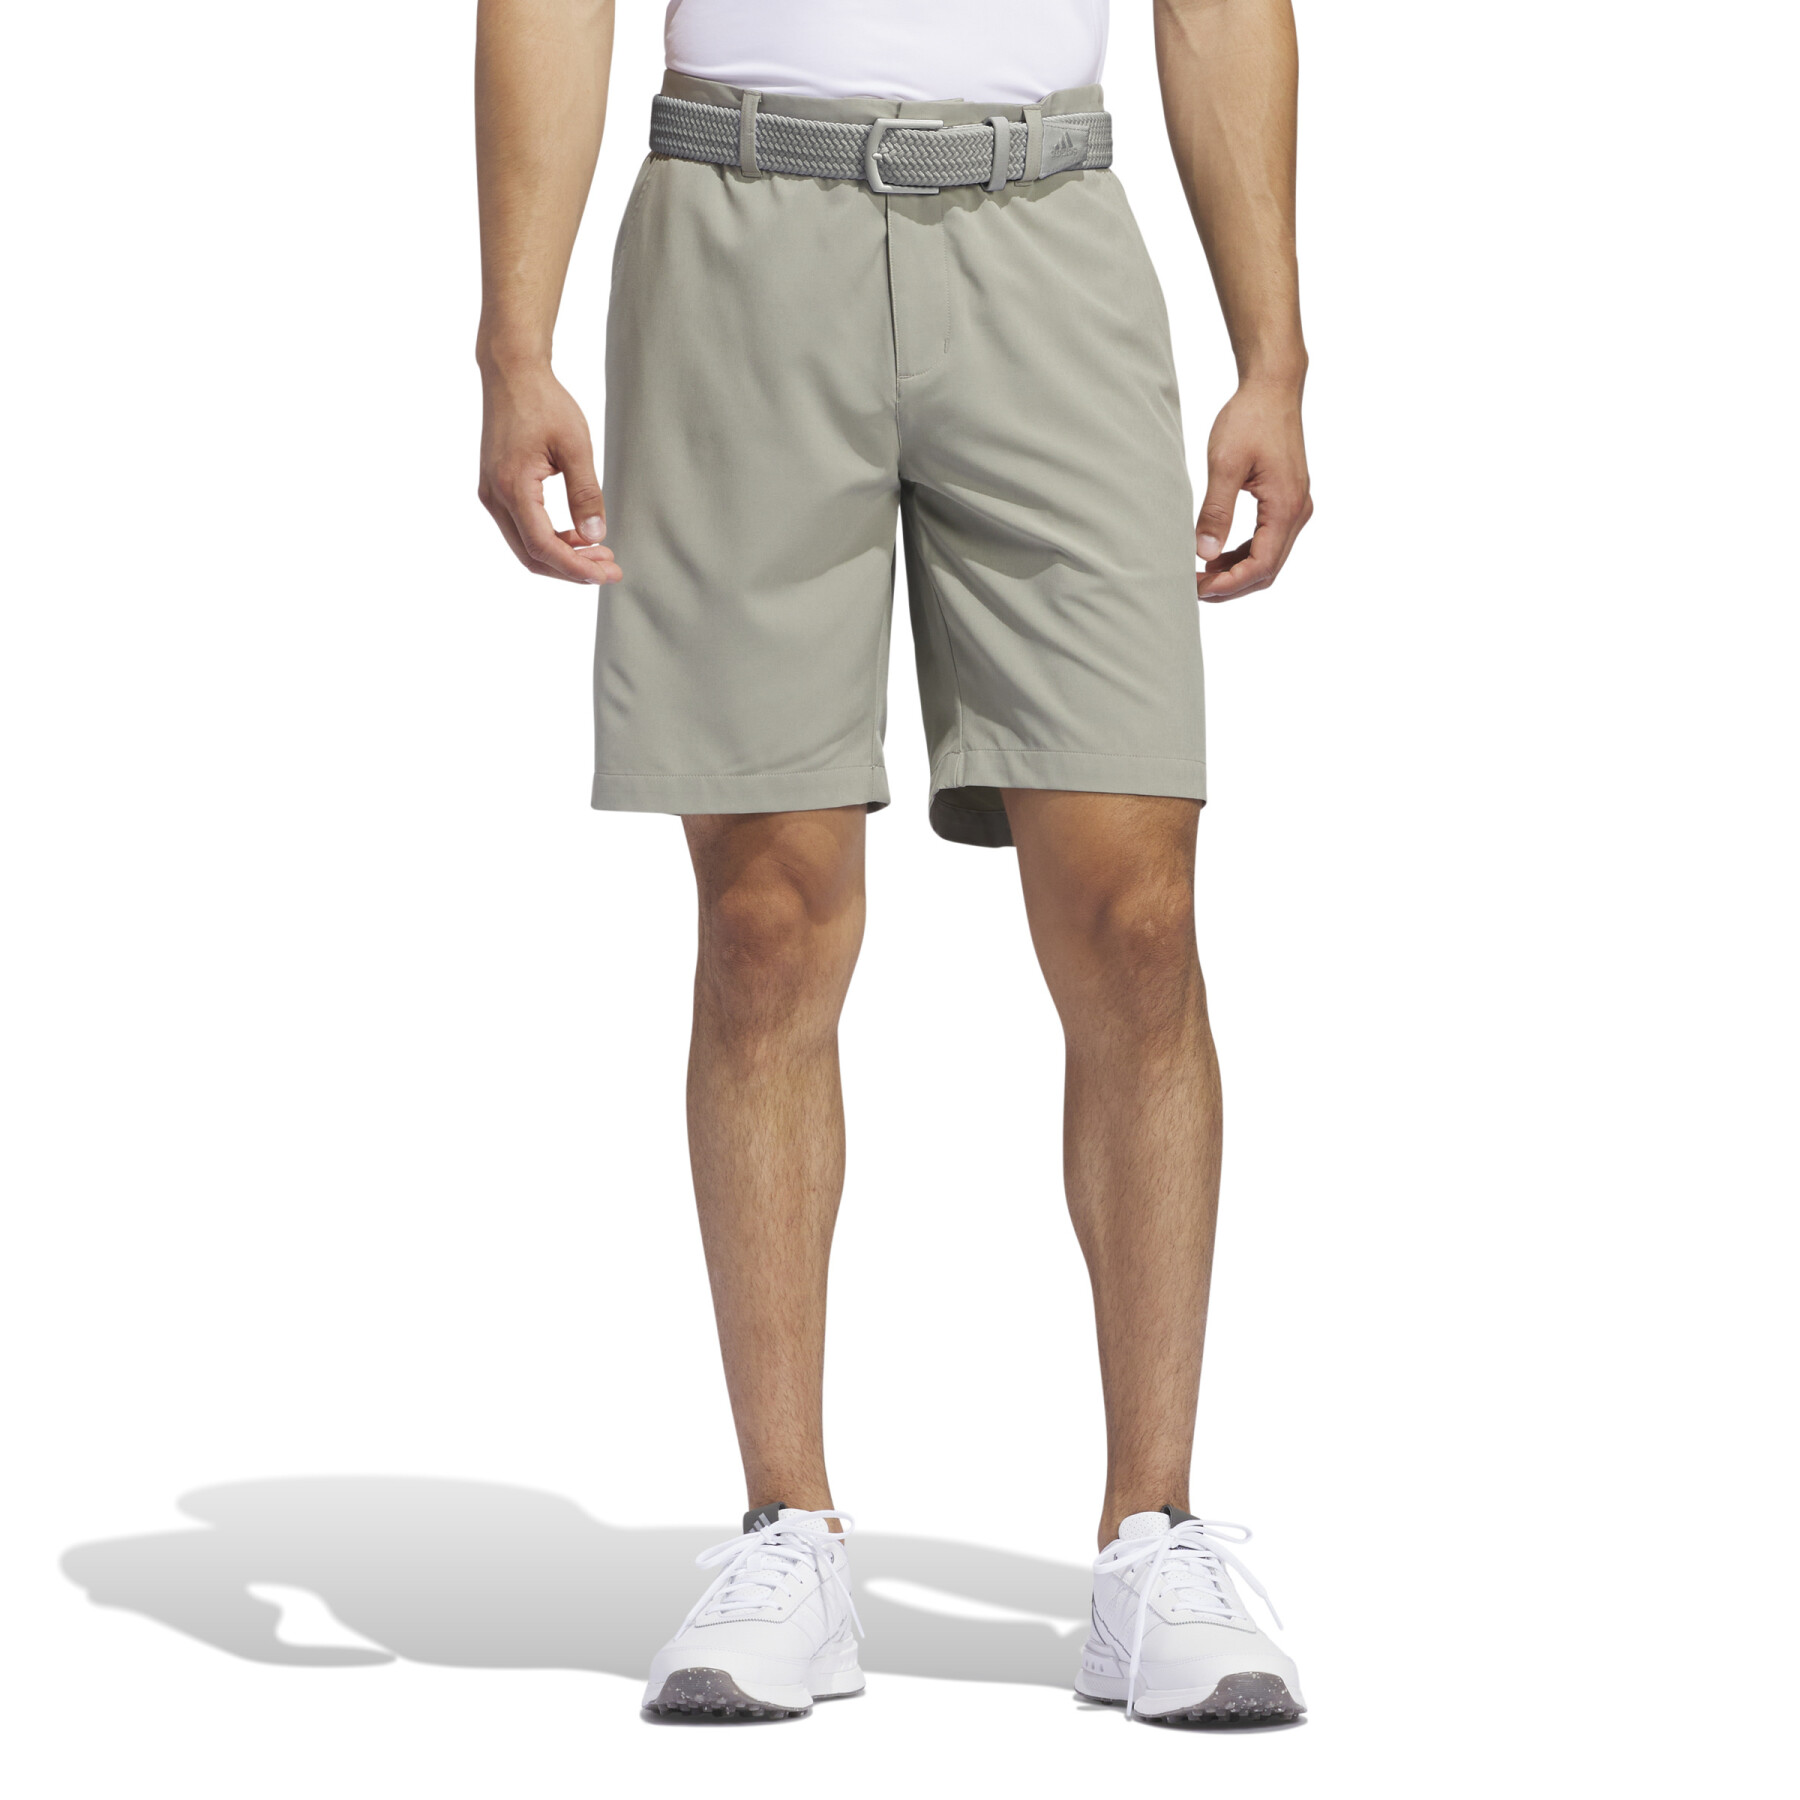 Bermuda shorts 8.5 inches adidas Ultimate